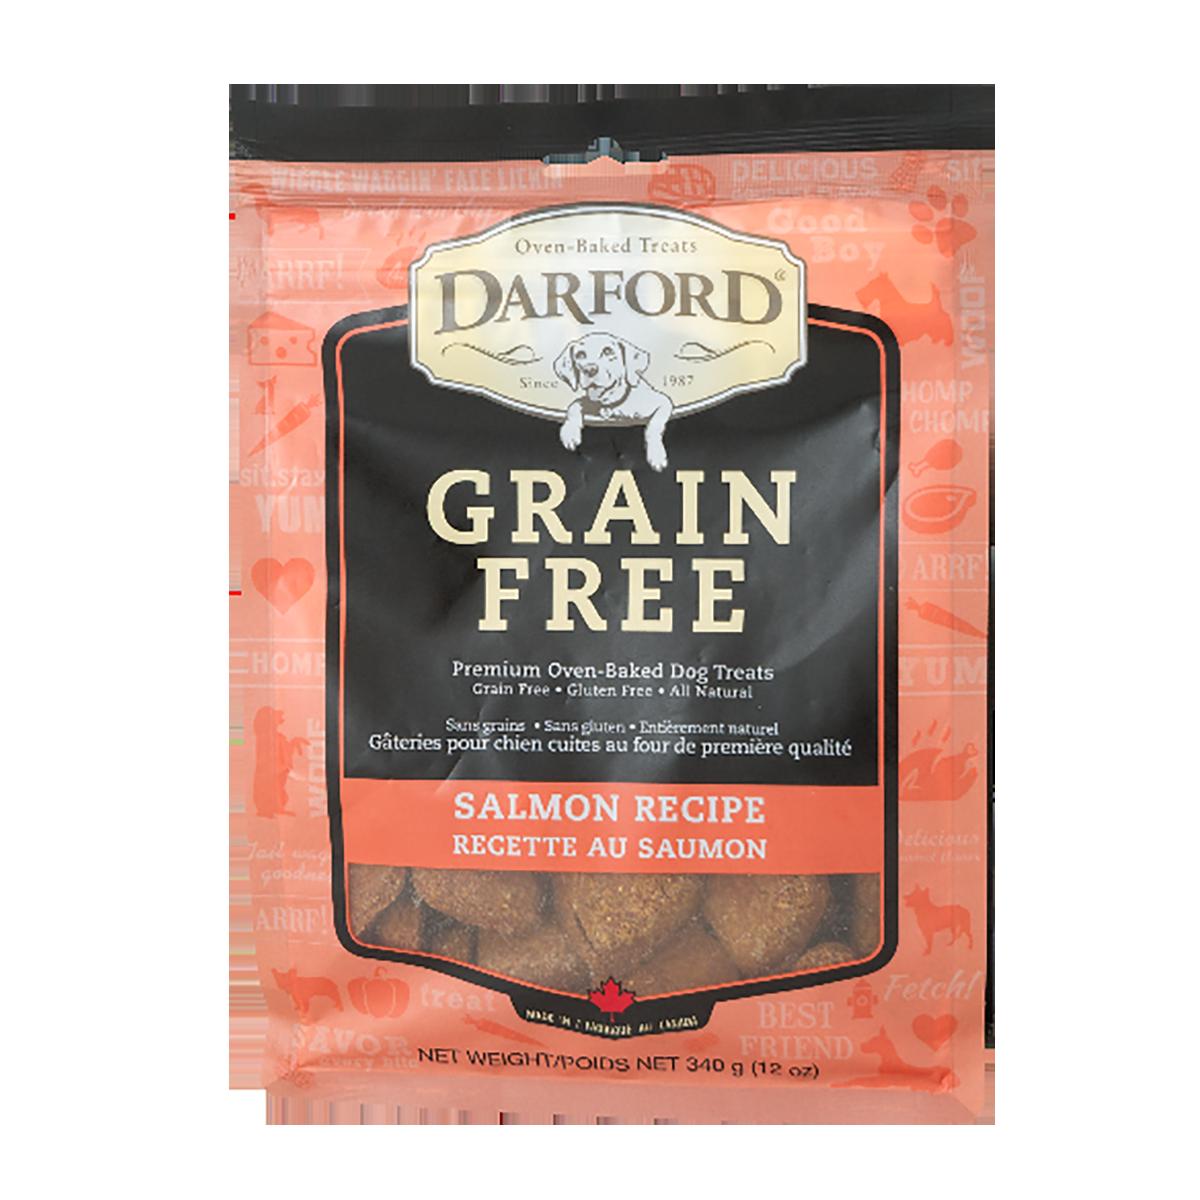 Darford Grain Free Dog Treats- Salmon